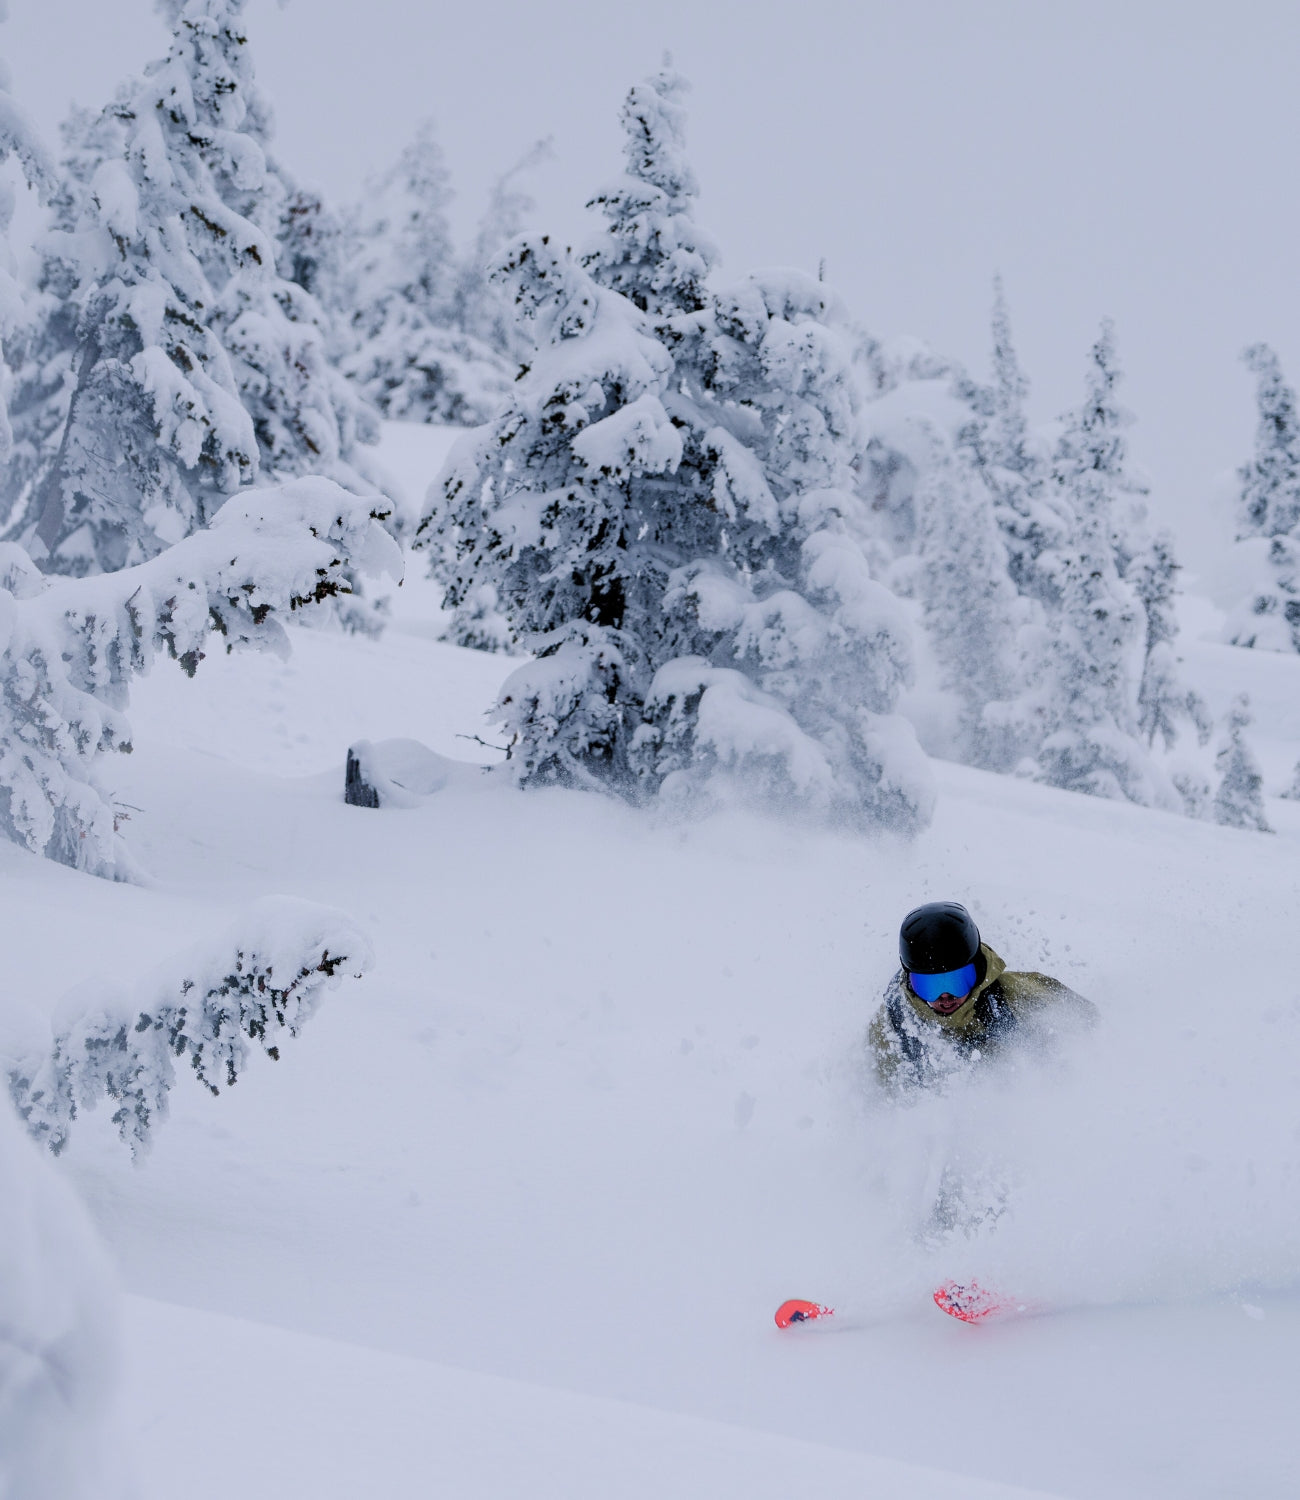 Skier gliding through deep powder snow amidst snow-covered trees on a mountain slope.